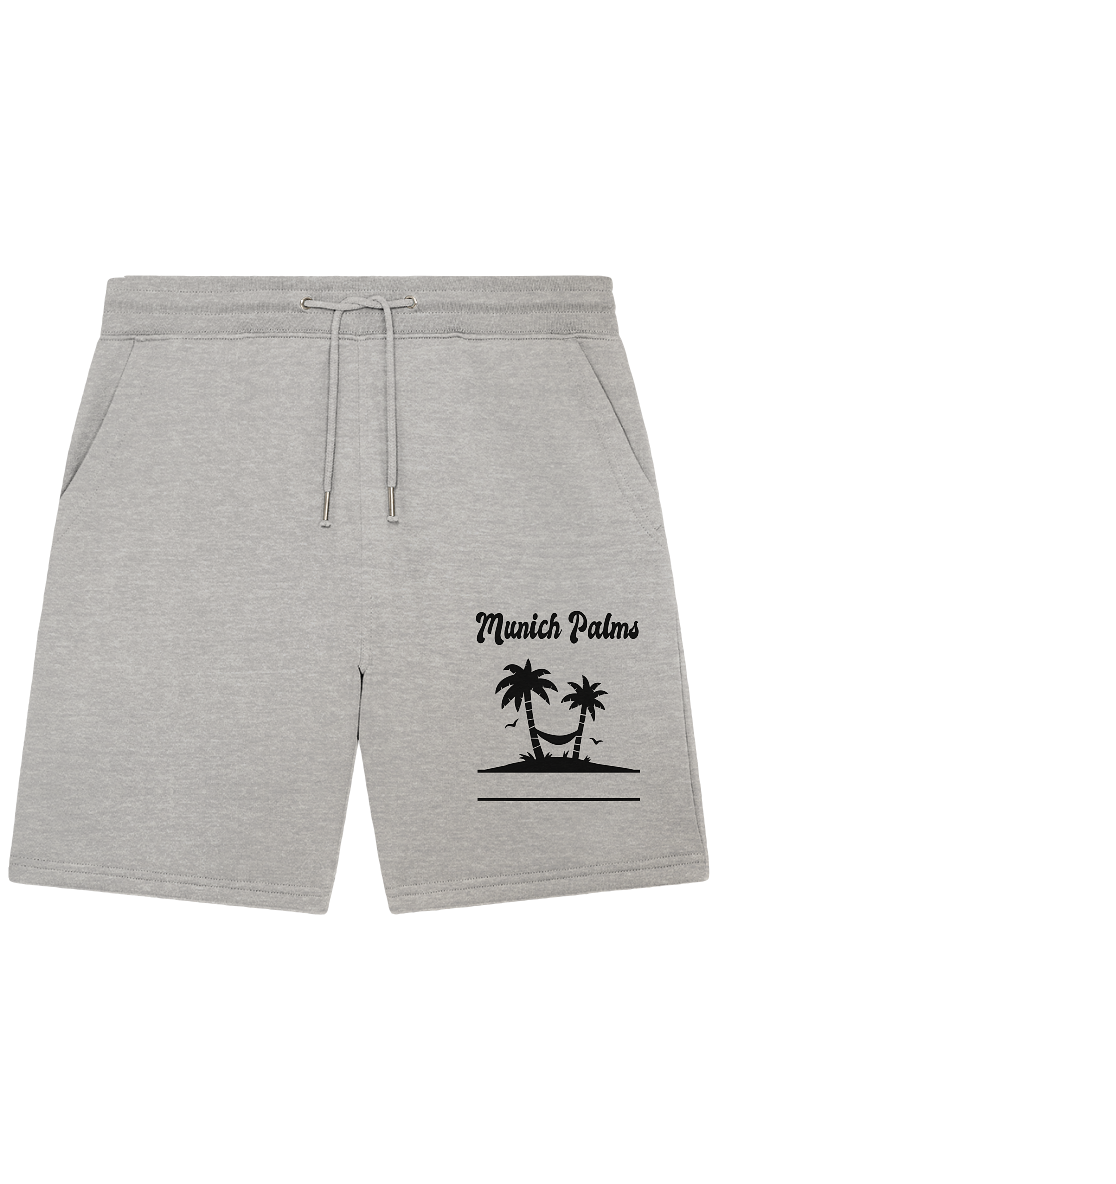 Design Munich Palms  - Organic Jogger Shorts